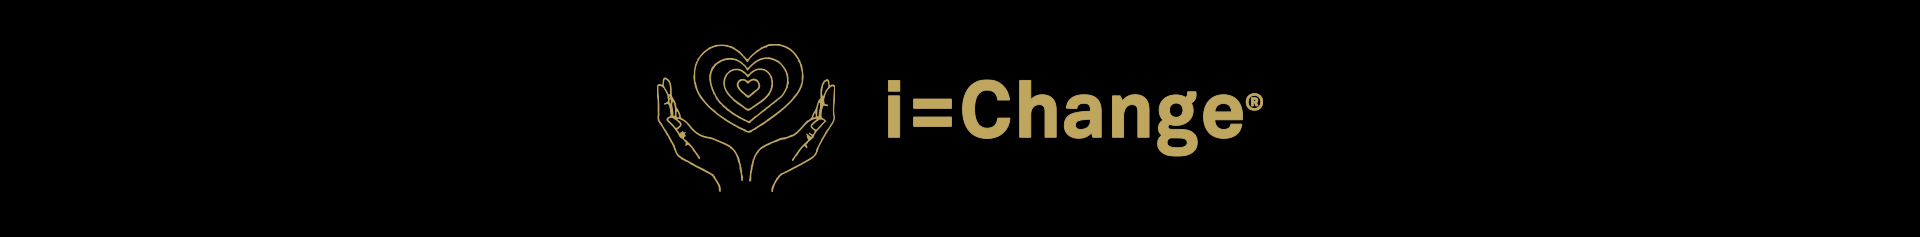 i=change